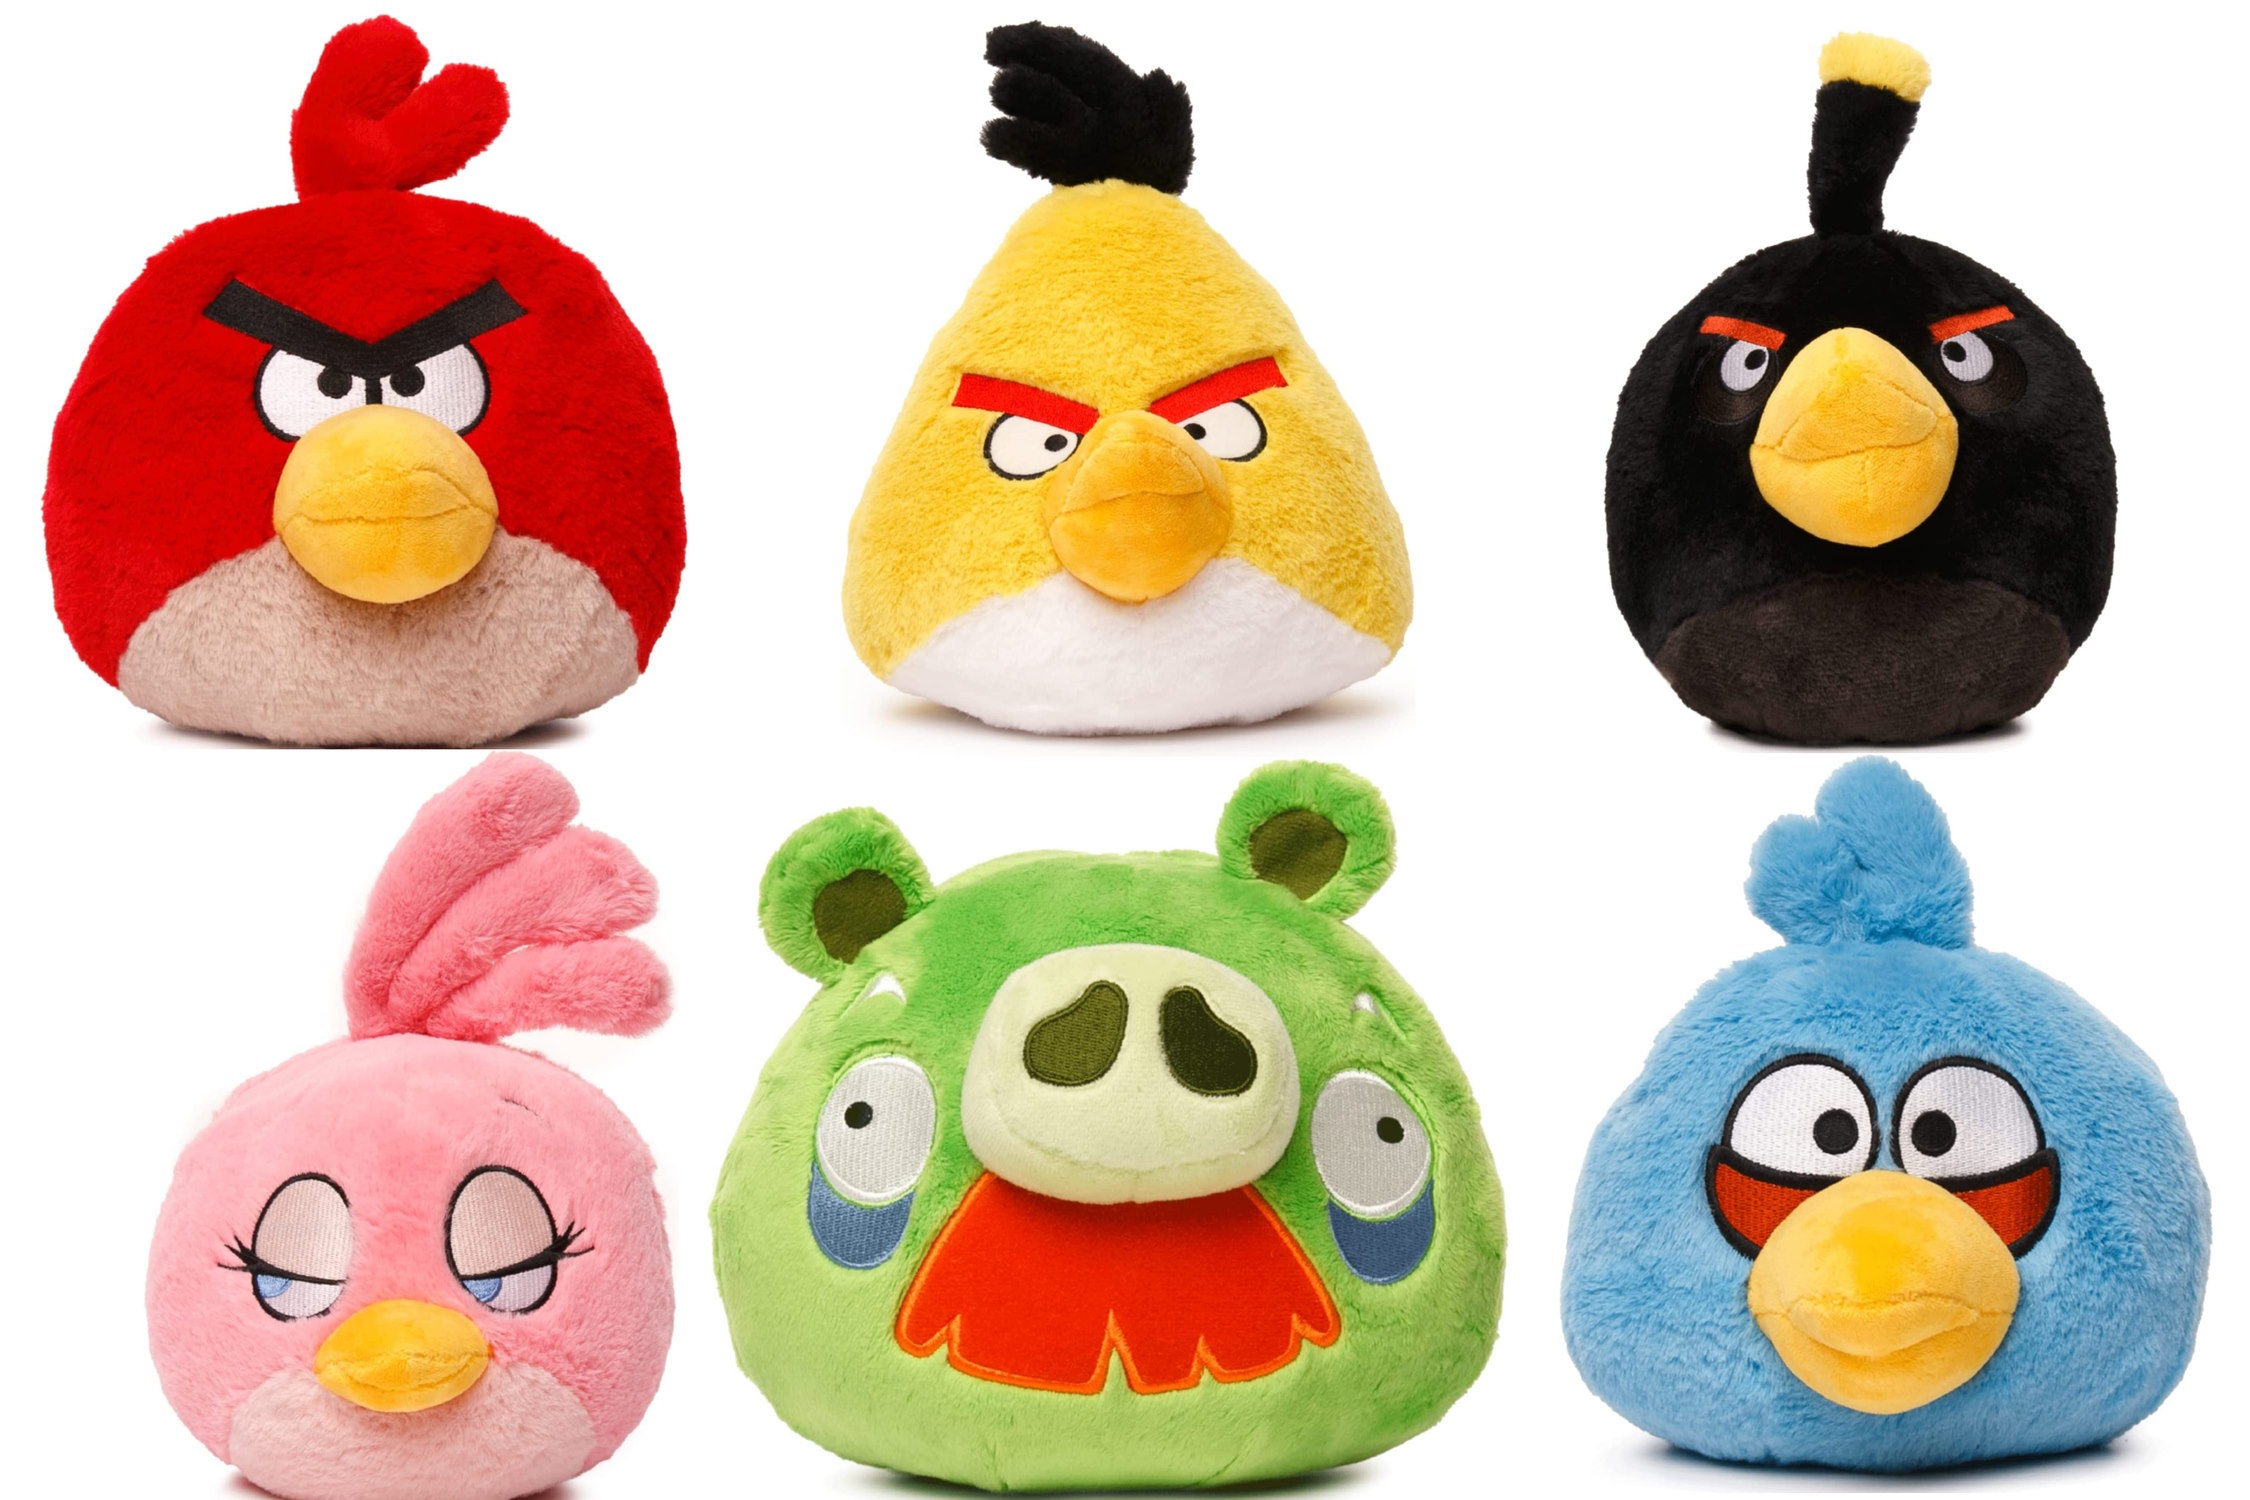 Plush Angry Birds